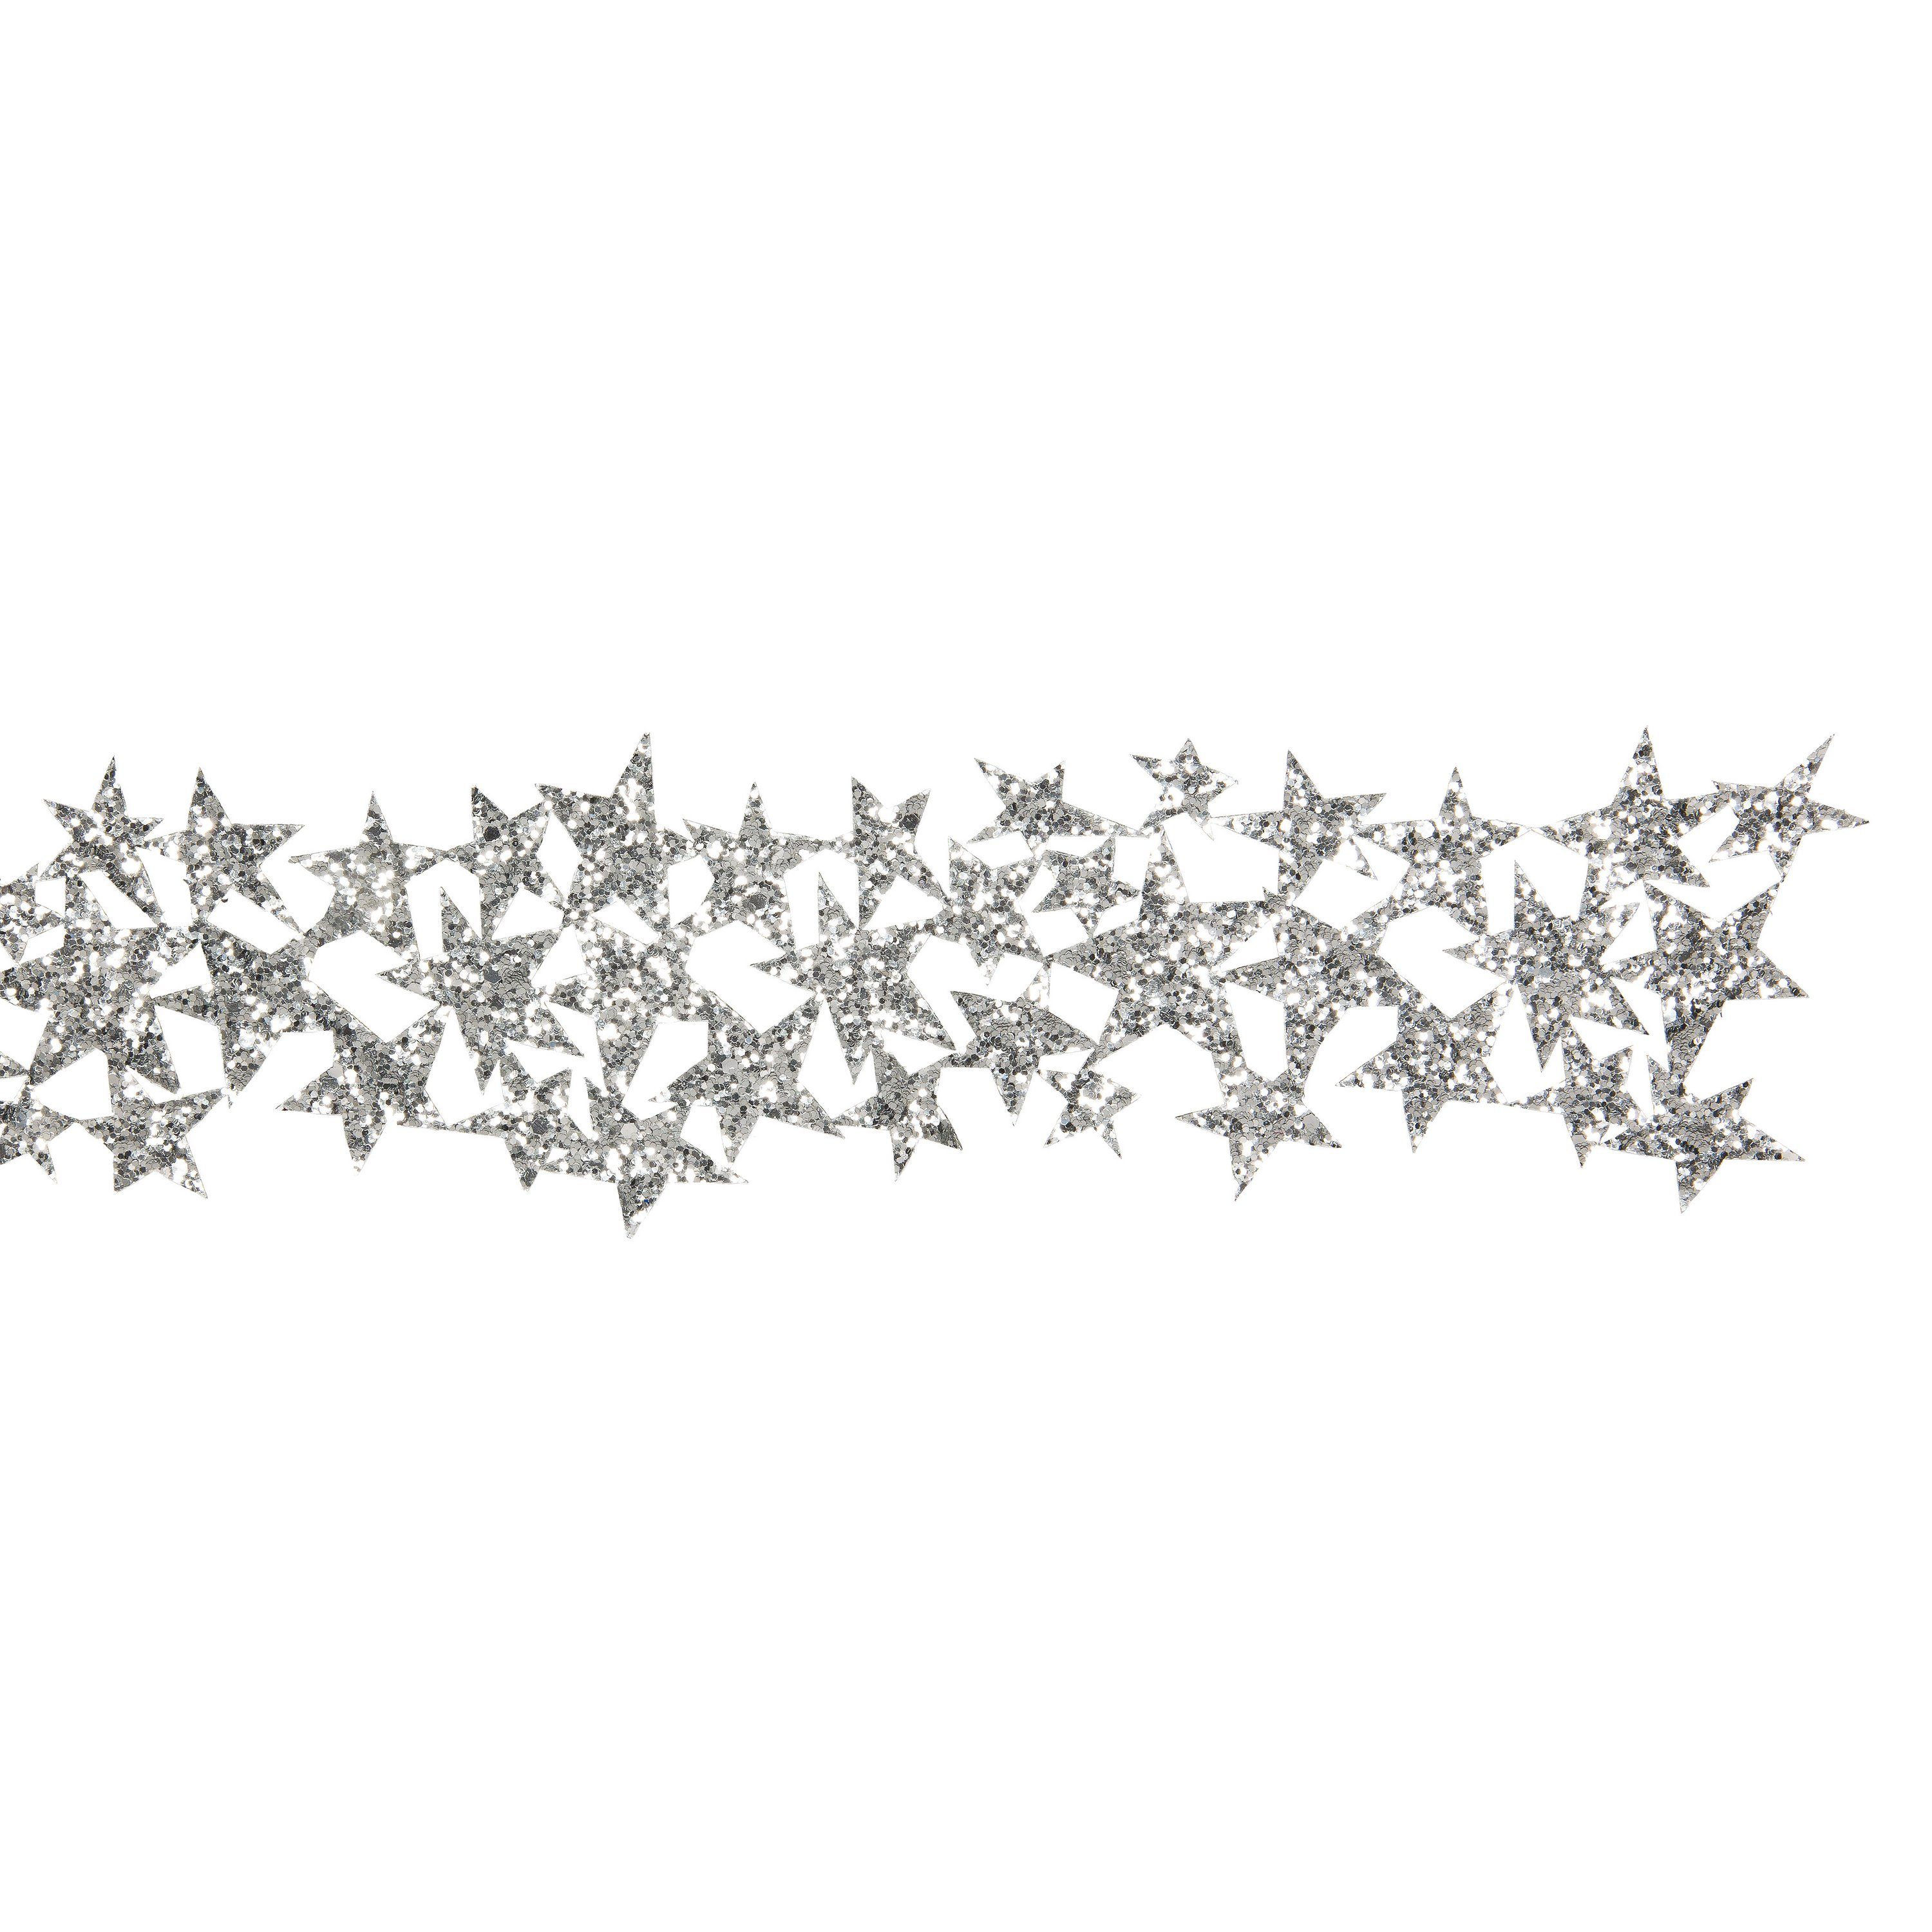 HALBACH Packpapier Glitterband Sterne 90 mm, 1 m lang Silber